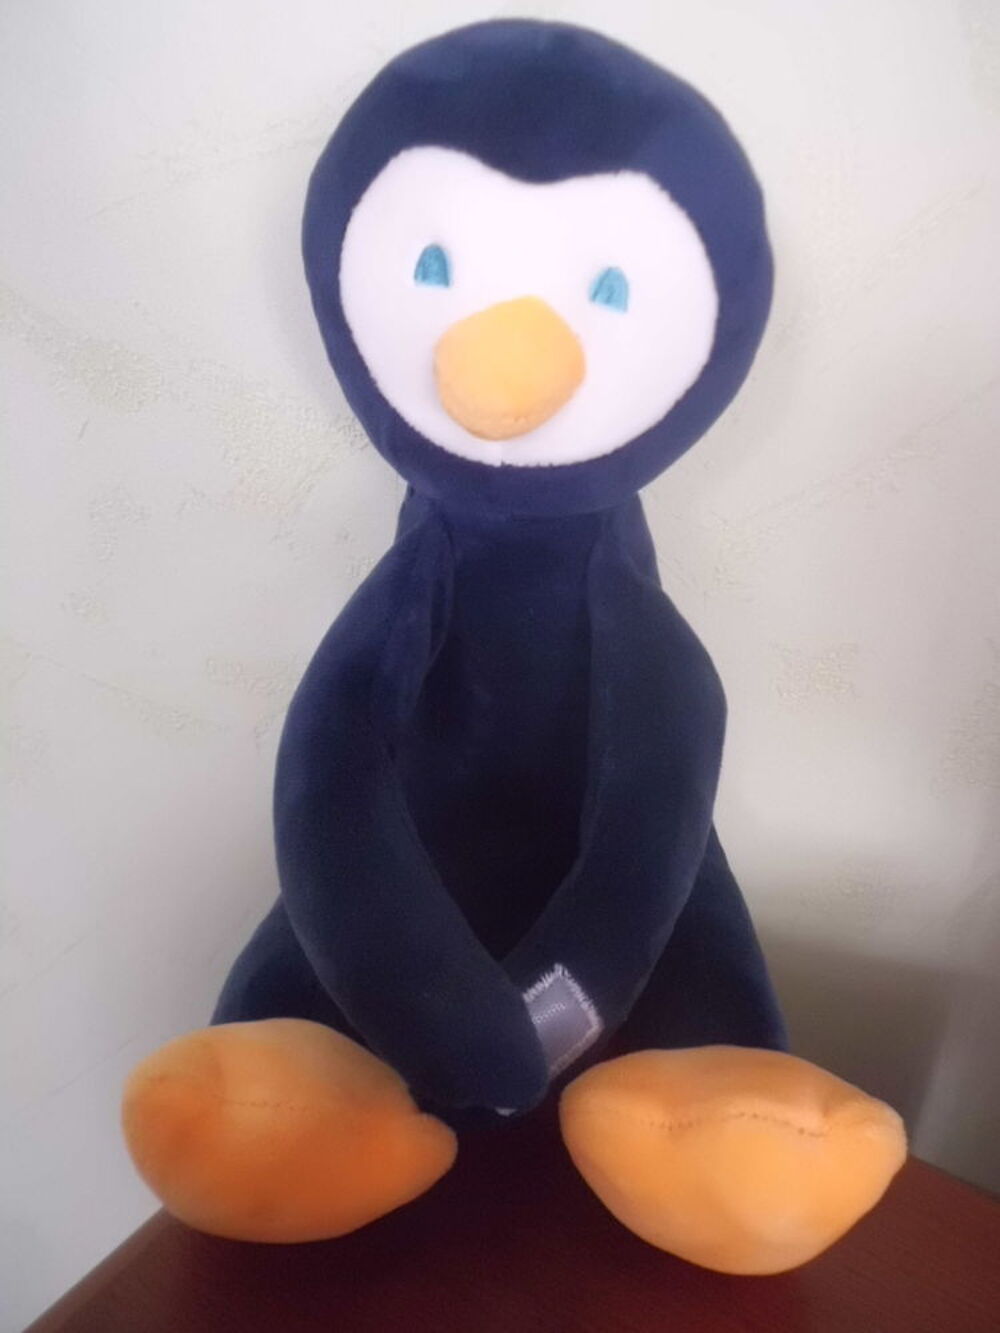 pingouin tomkids Jeux / jouets